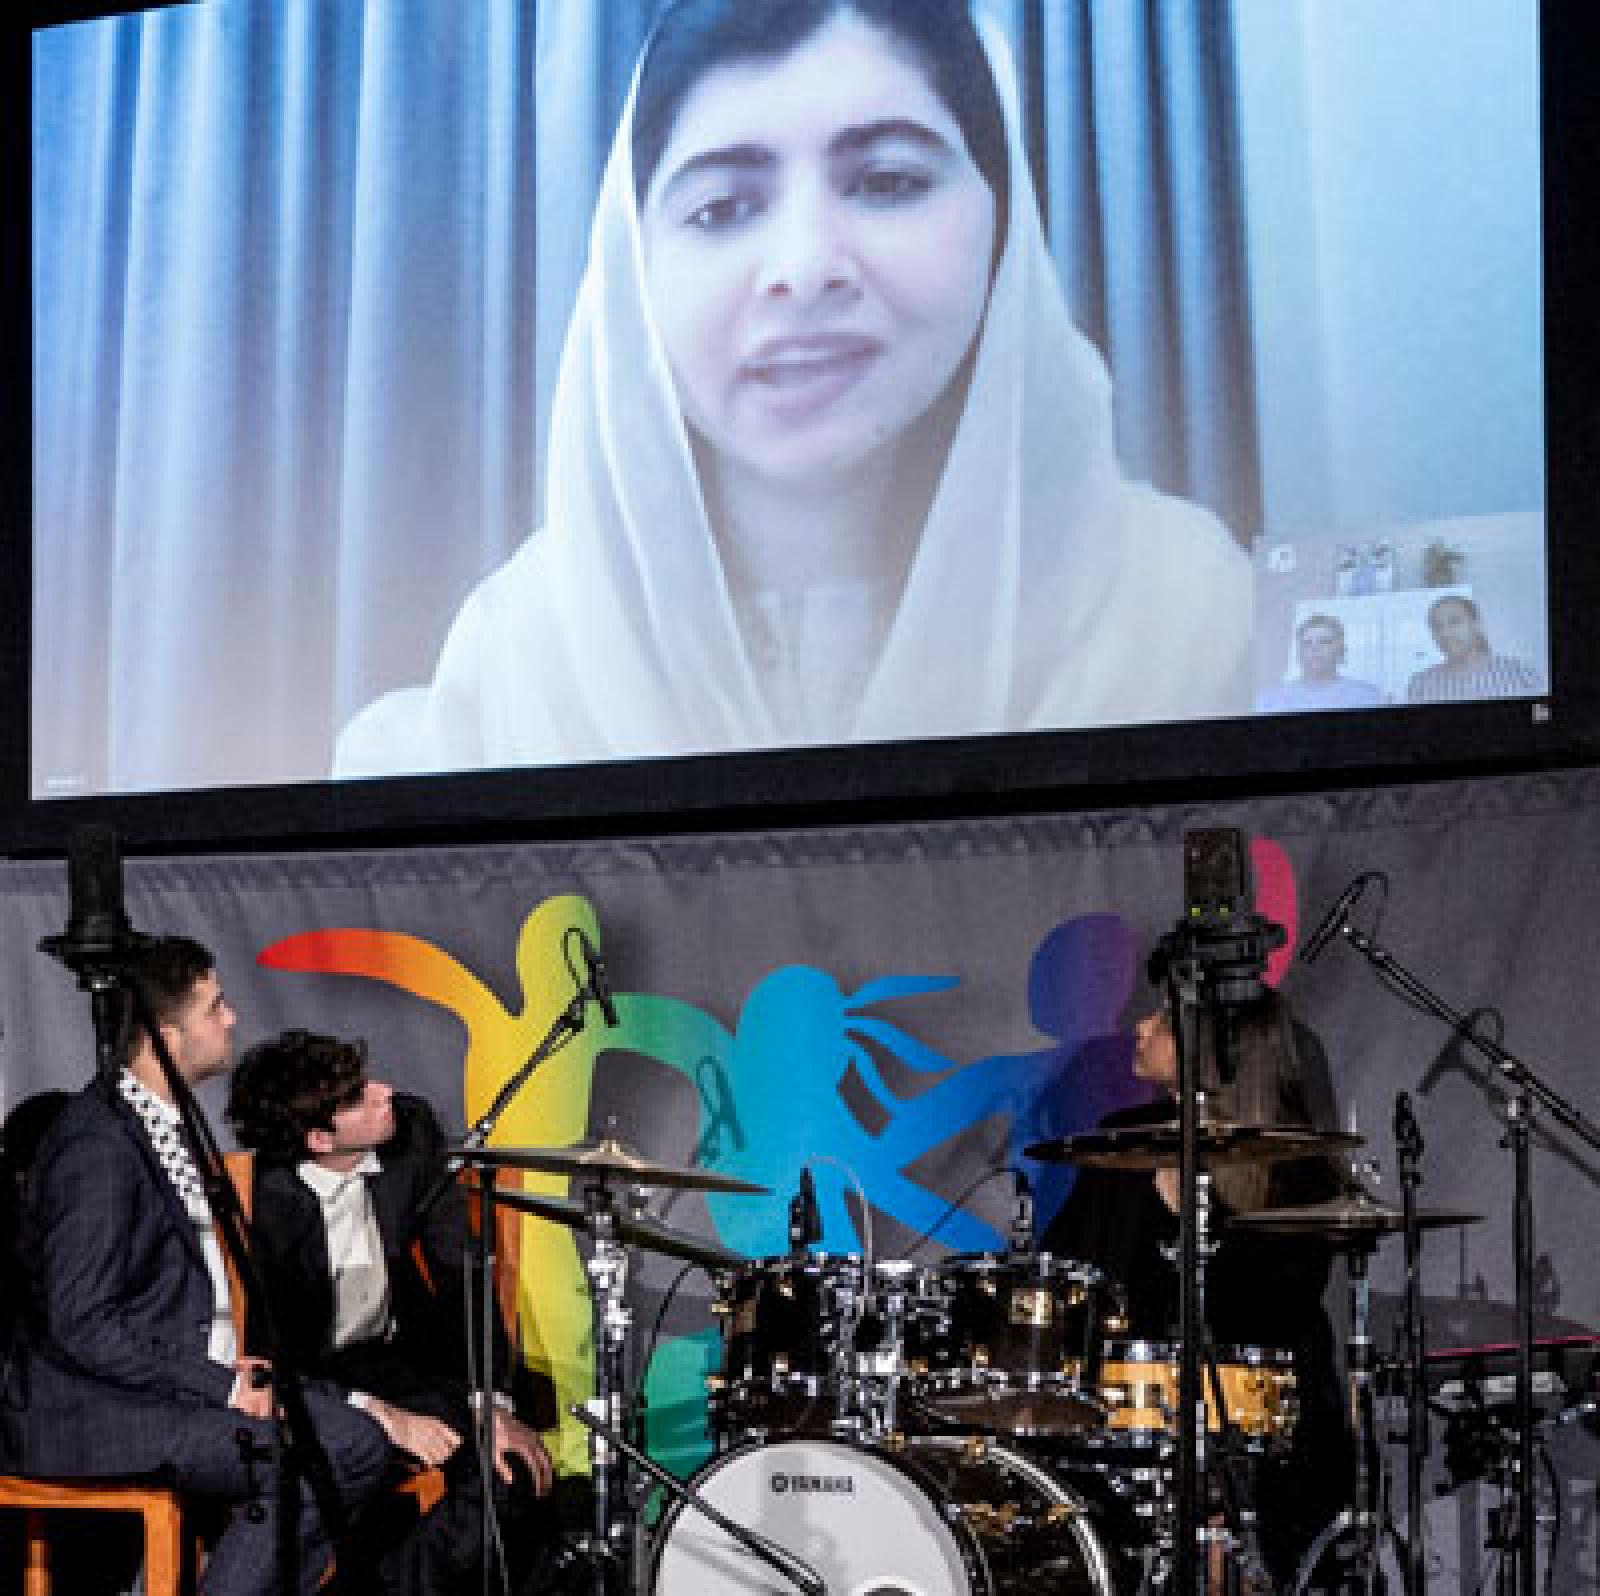 Malala giving speech on large video screen.